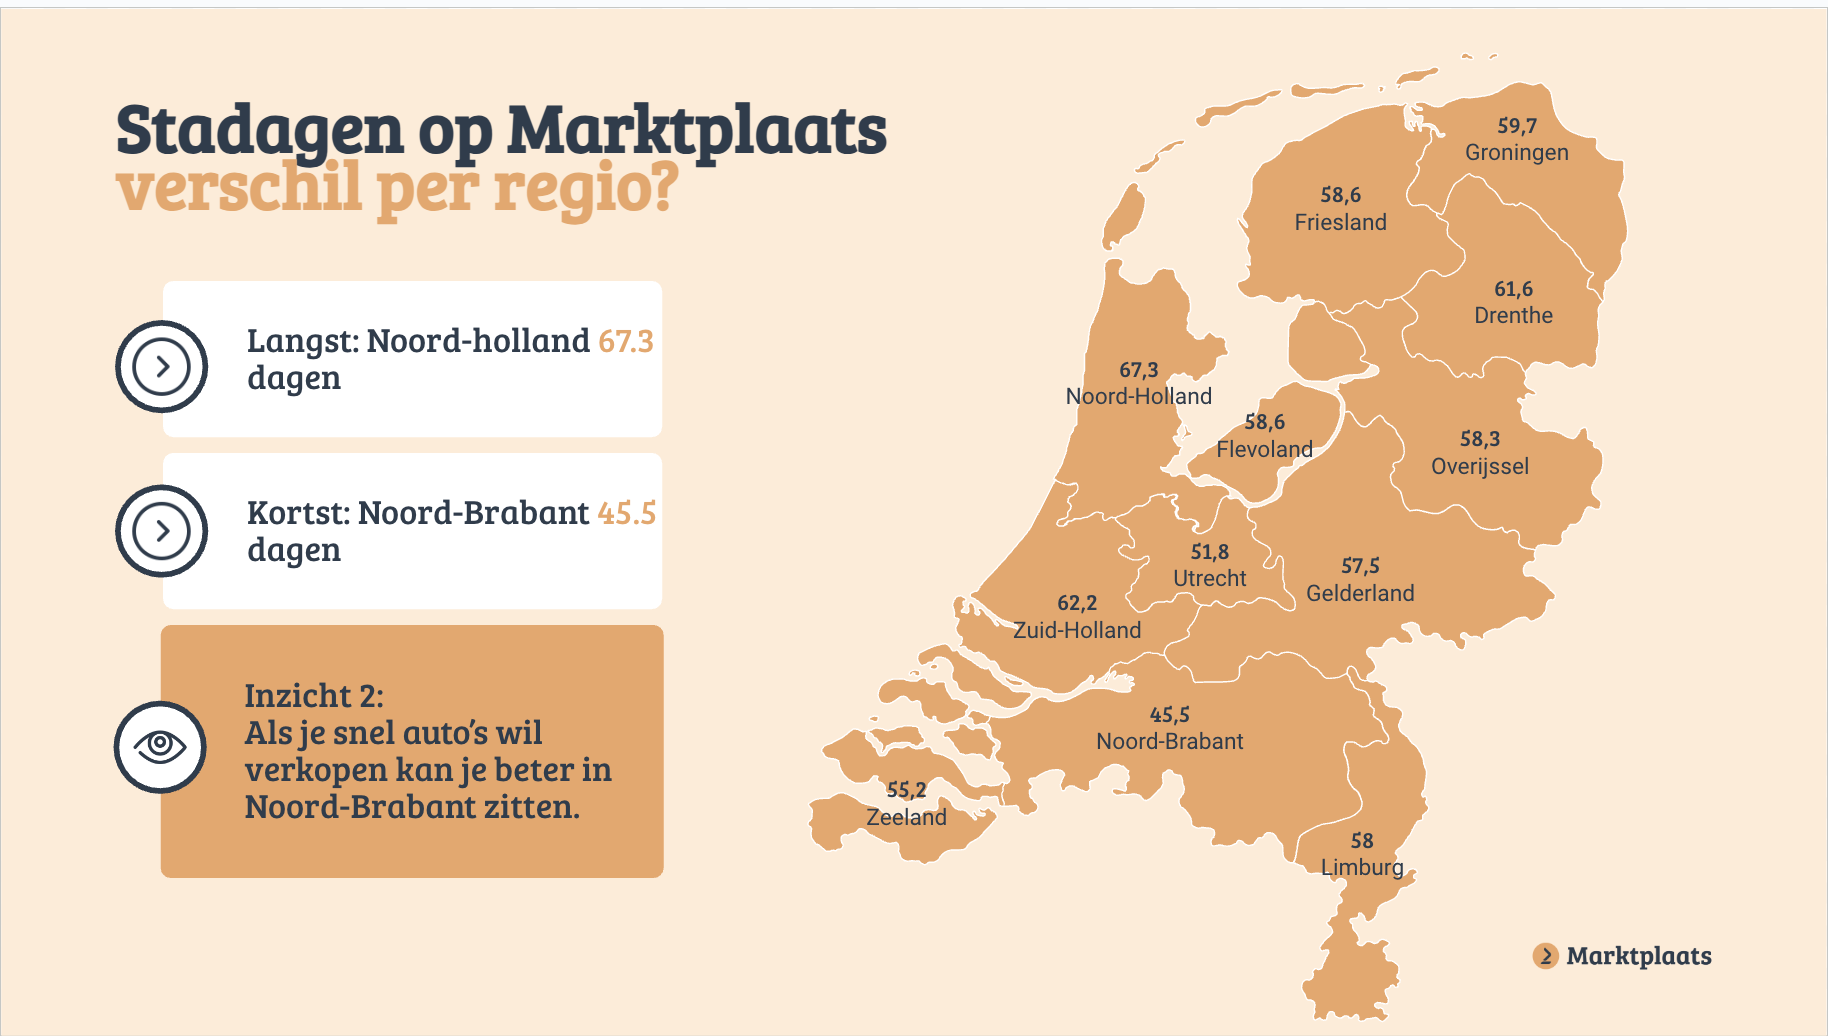 Holding days on Marktplaats per region